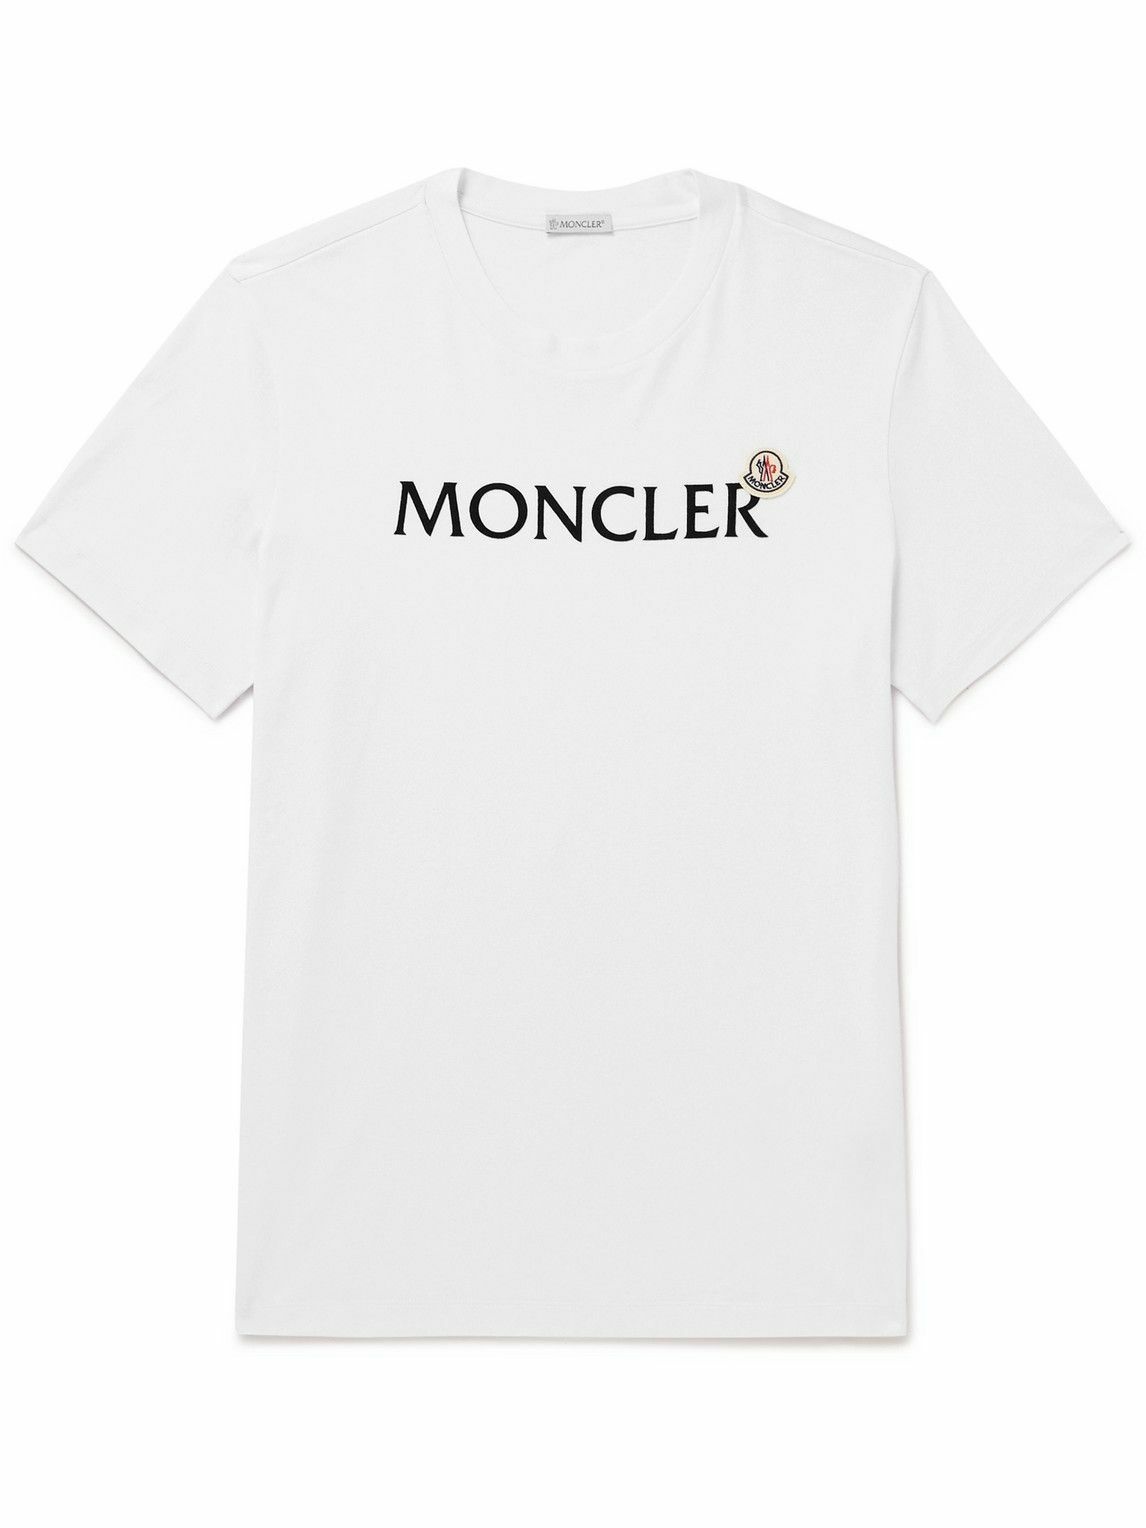 Moncler - Slim-Fit Logo-Flocked Cotton-Jersey T-Shirt - White Moncler